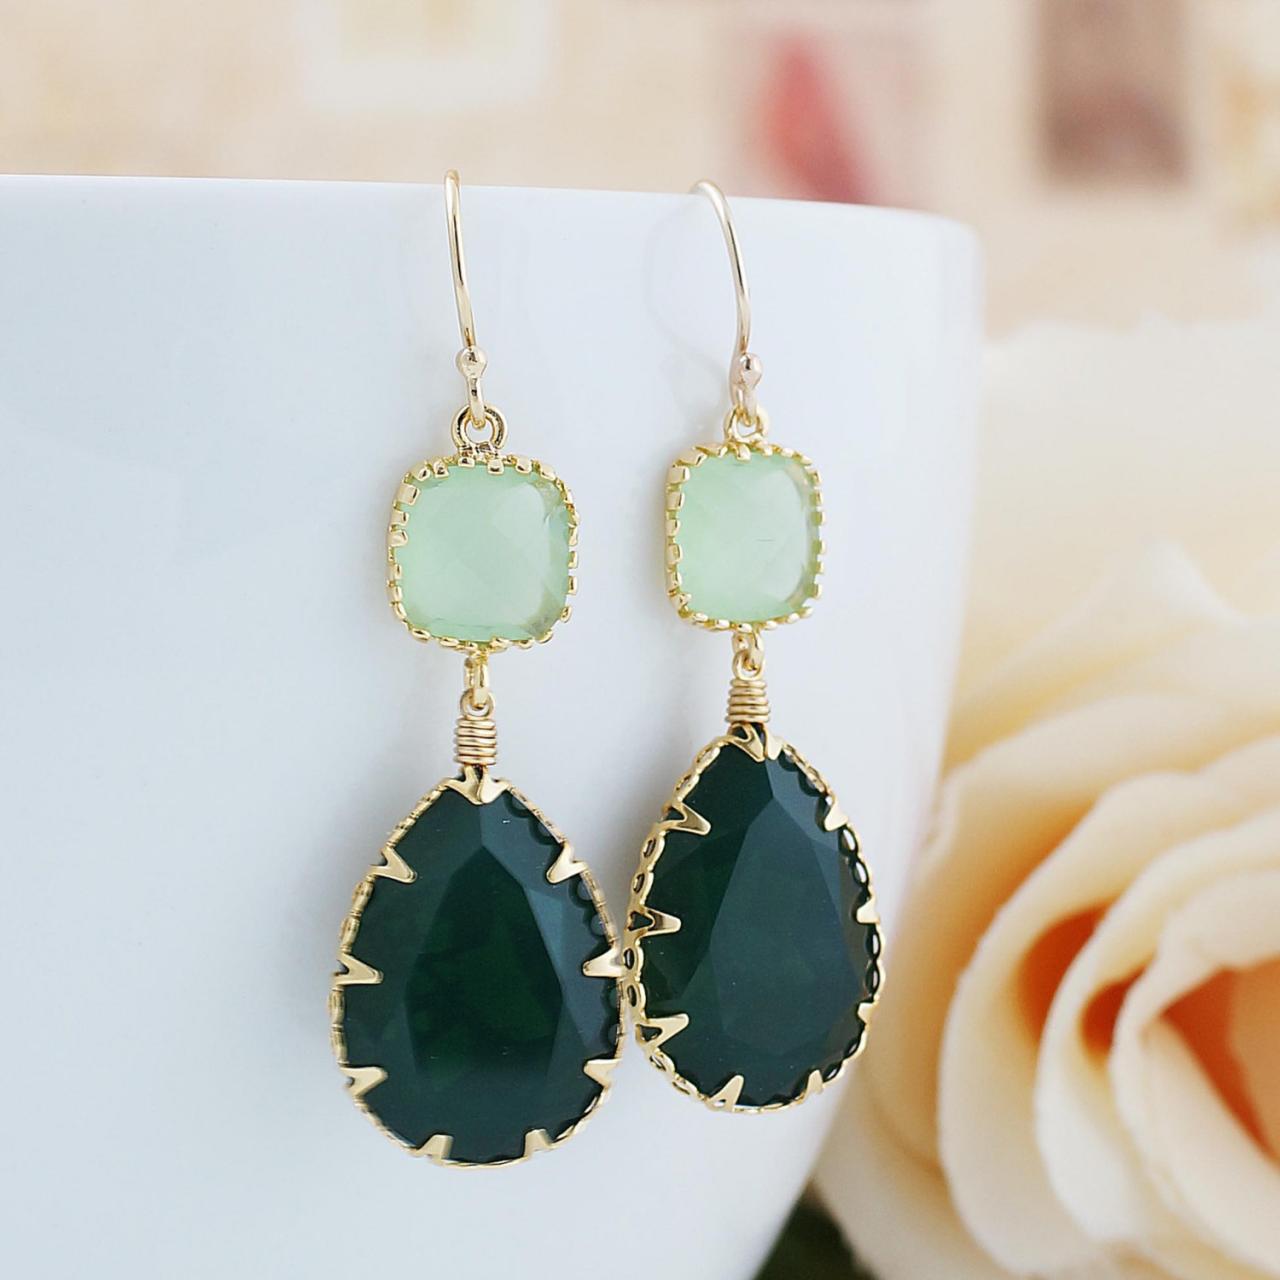 Swarovski Crystal Green Opal Gold Filled Earrings - Dangle Earrings Pastel Earrings Gift For Her Weddings Bridesmaid Jewelry Bridesmaid Gift